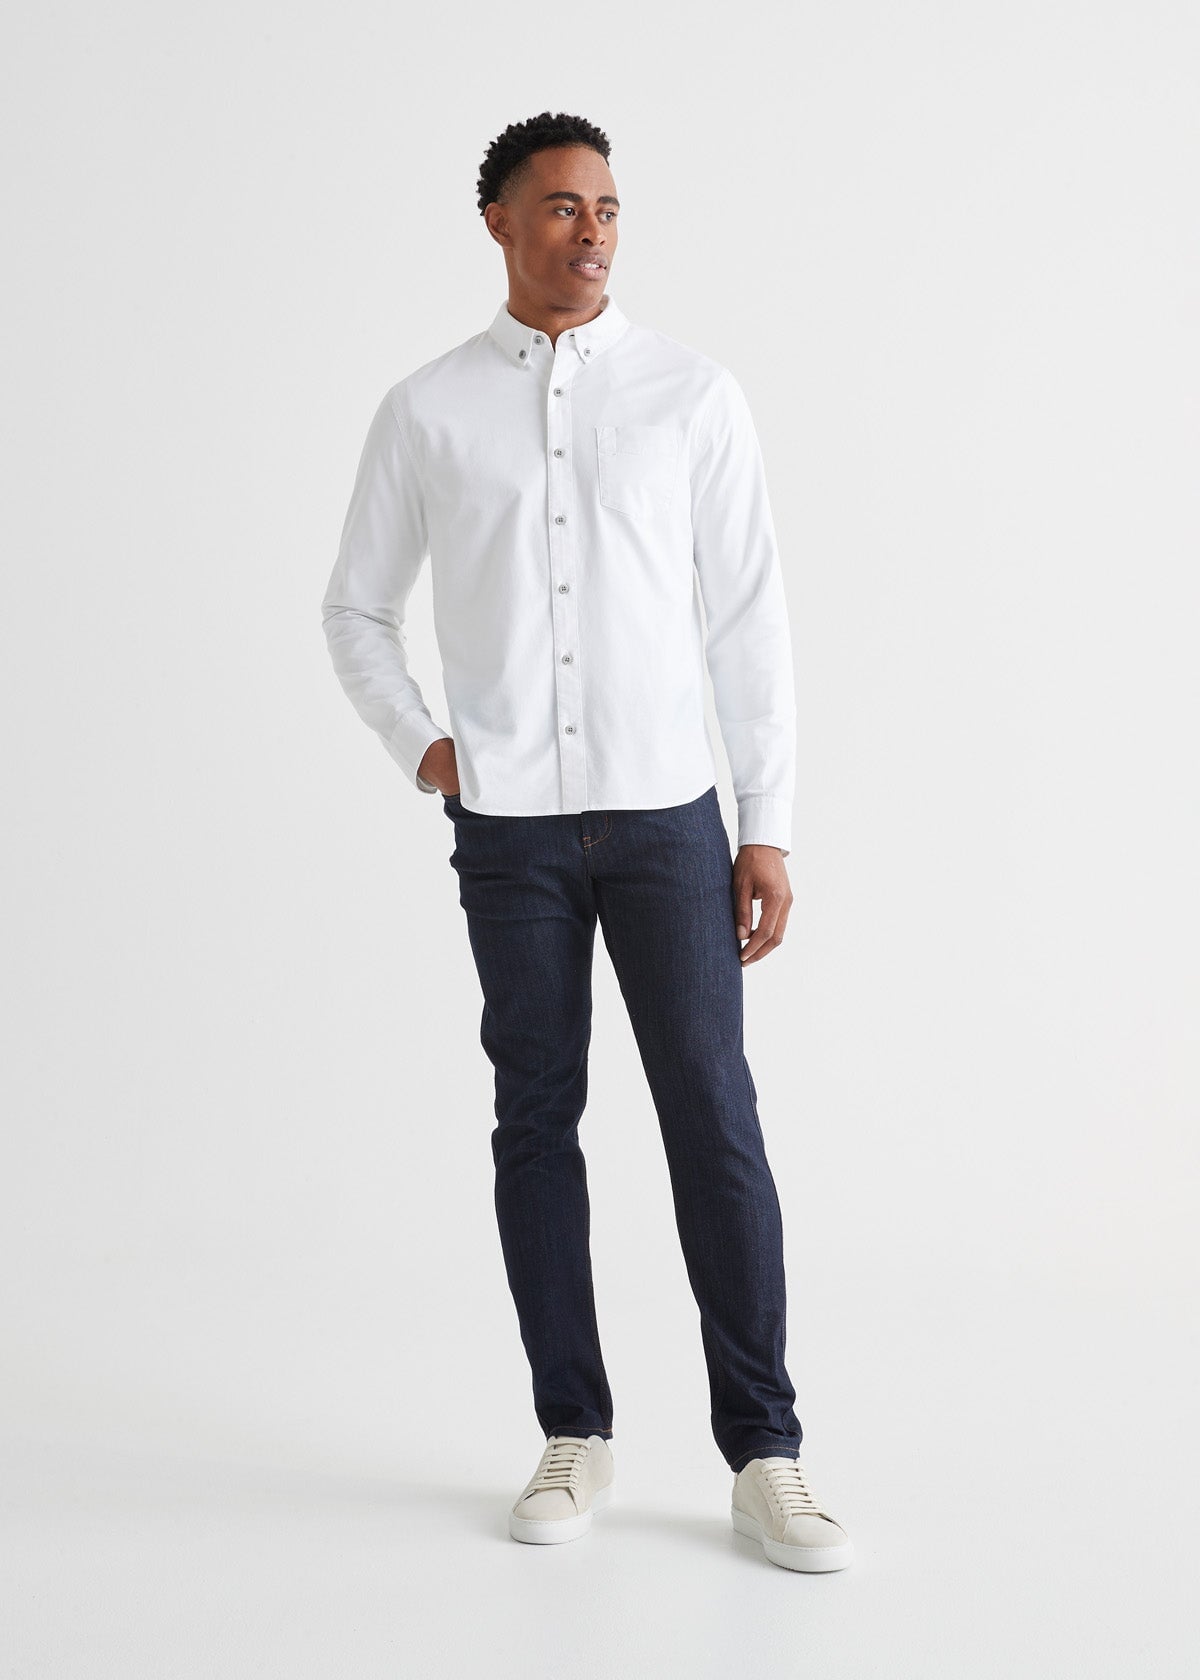 Brand new nautical men’s extra-large white button down shirt